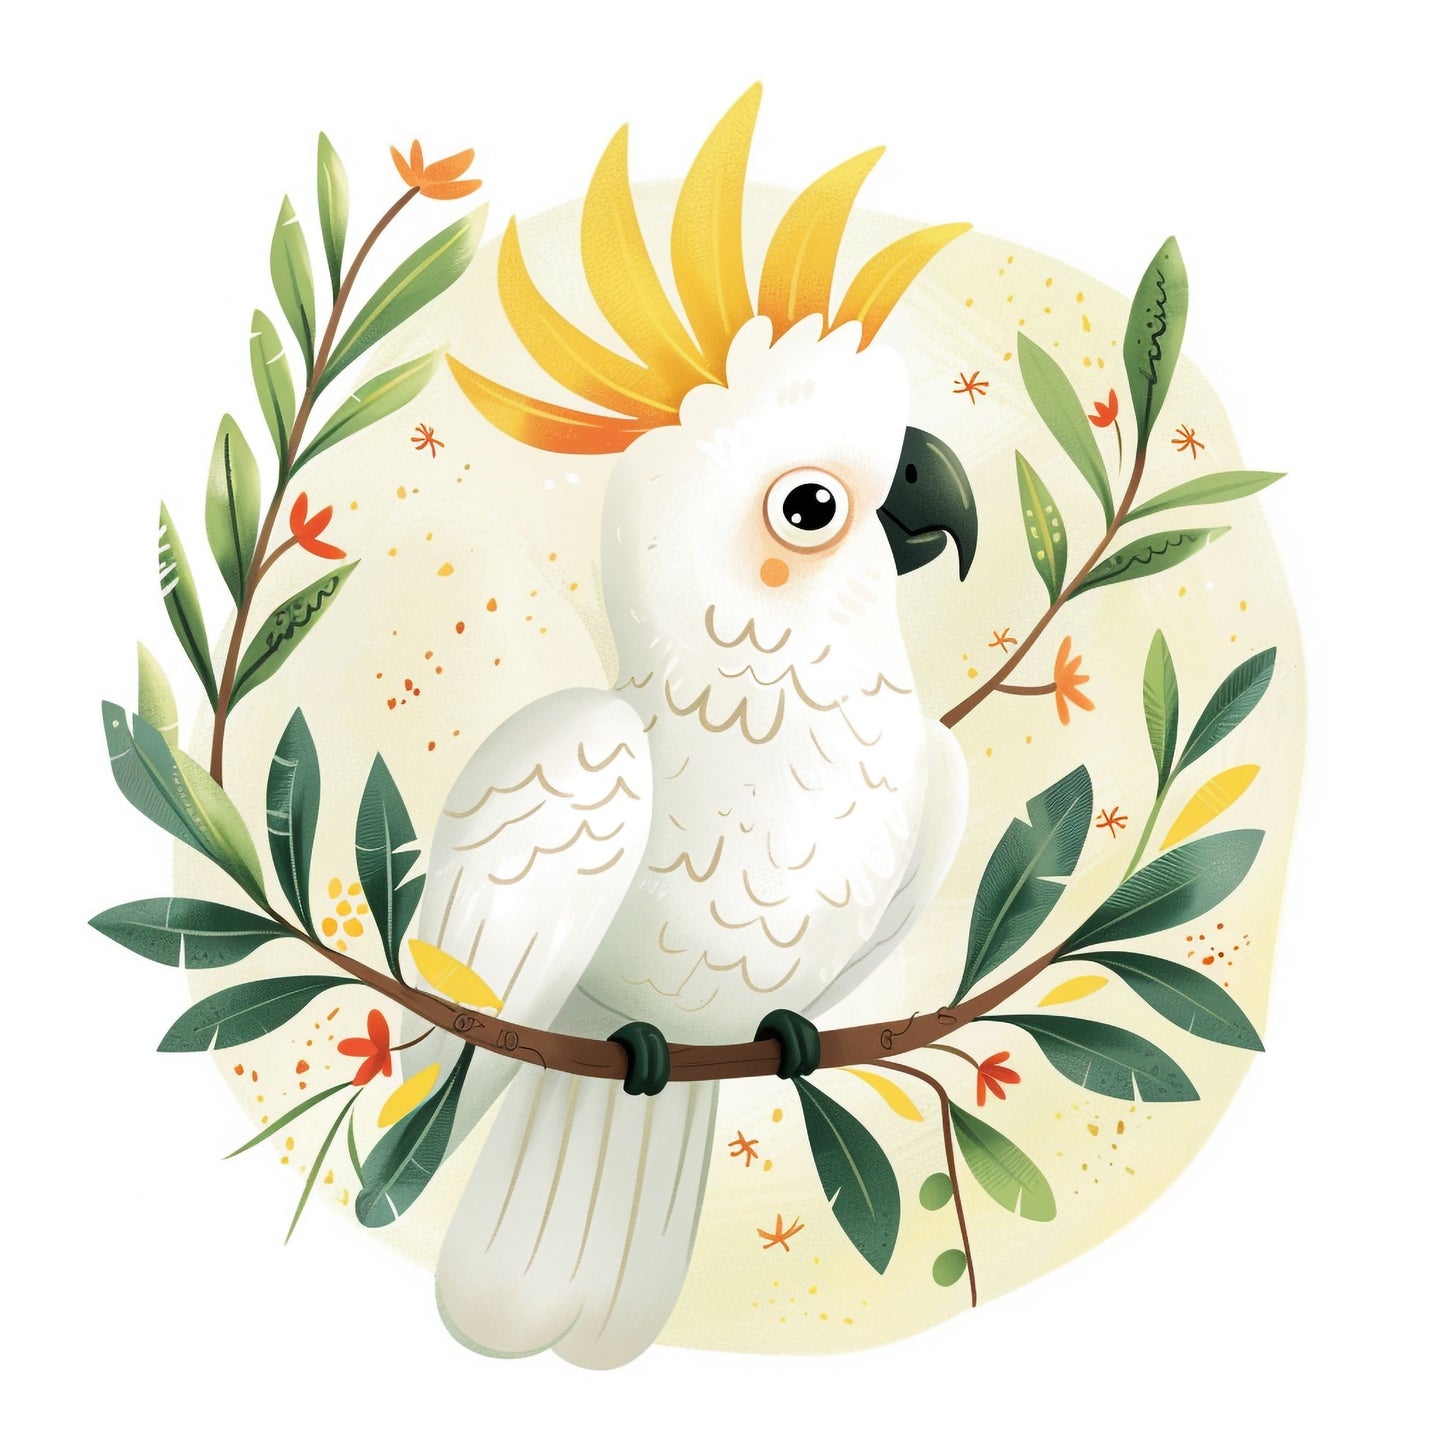 Cheerful Cockatoo Amongst Tropical Foliage Illustration